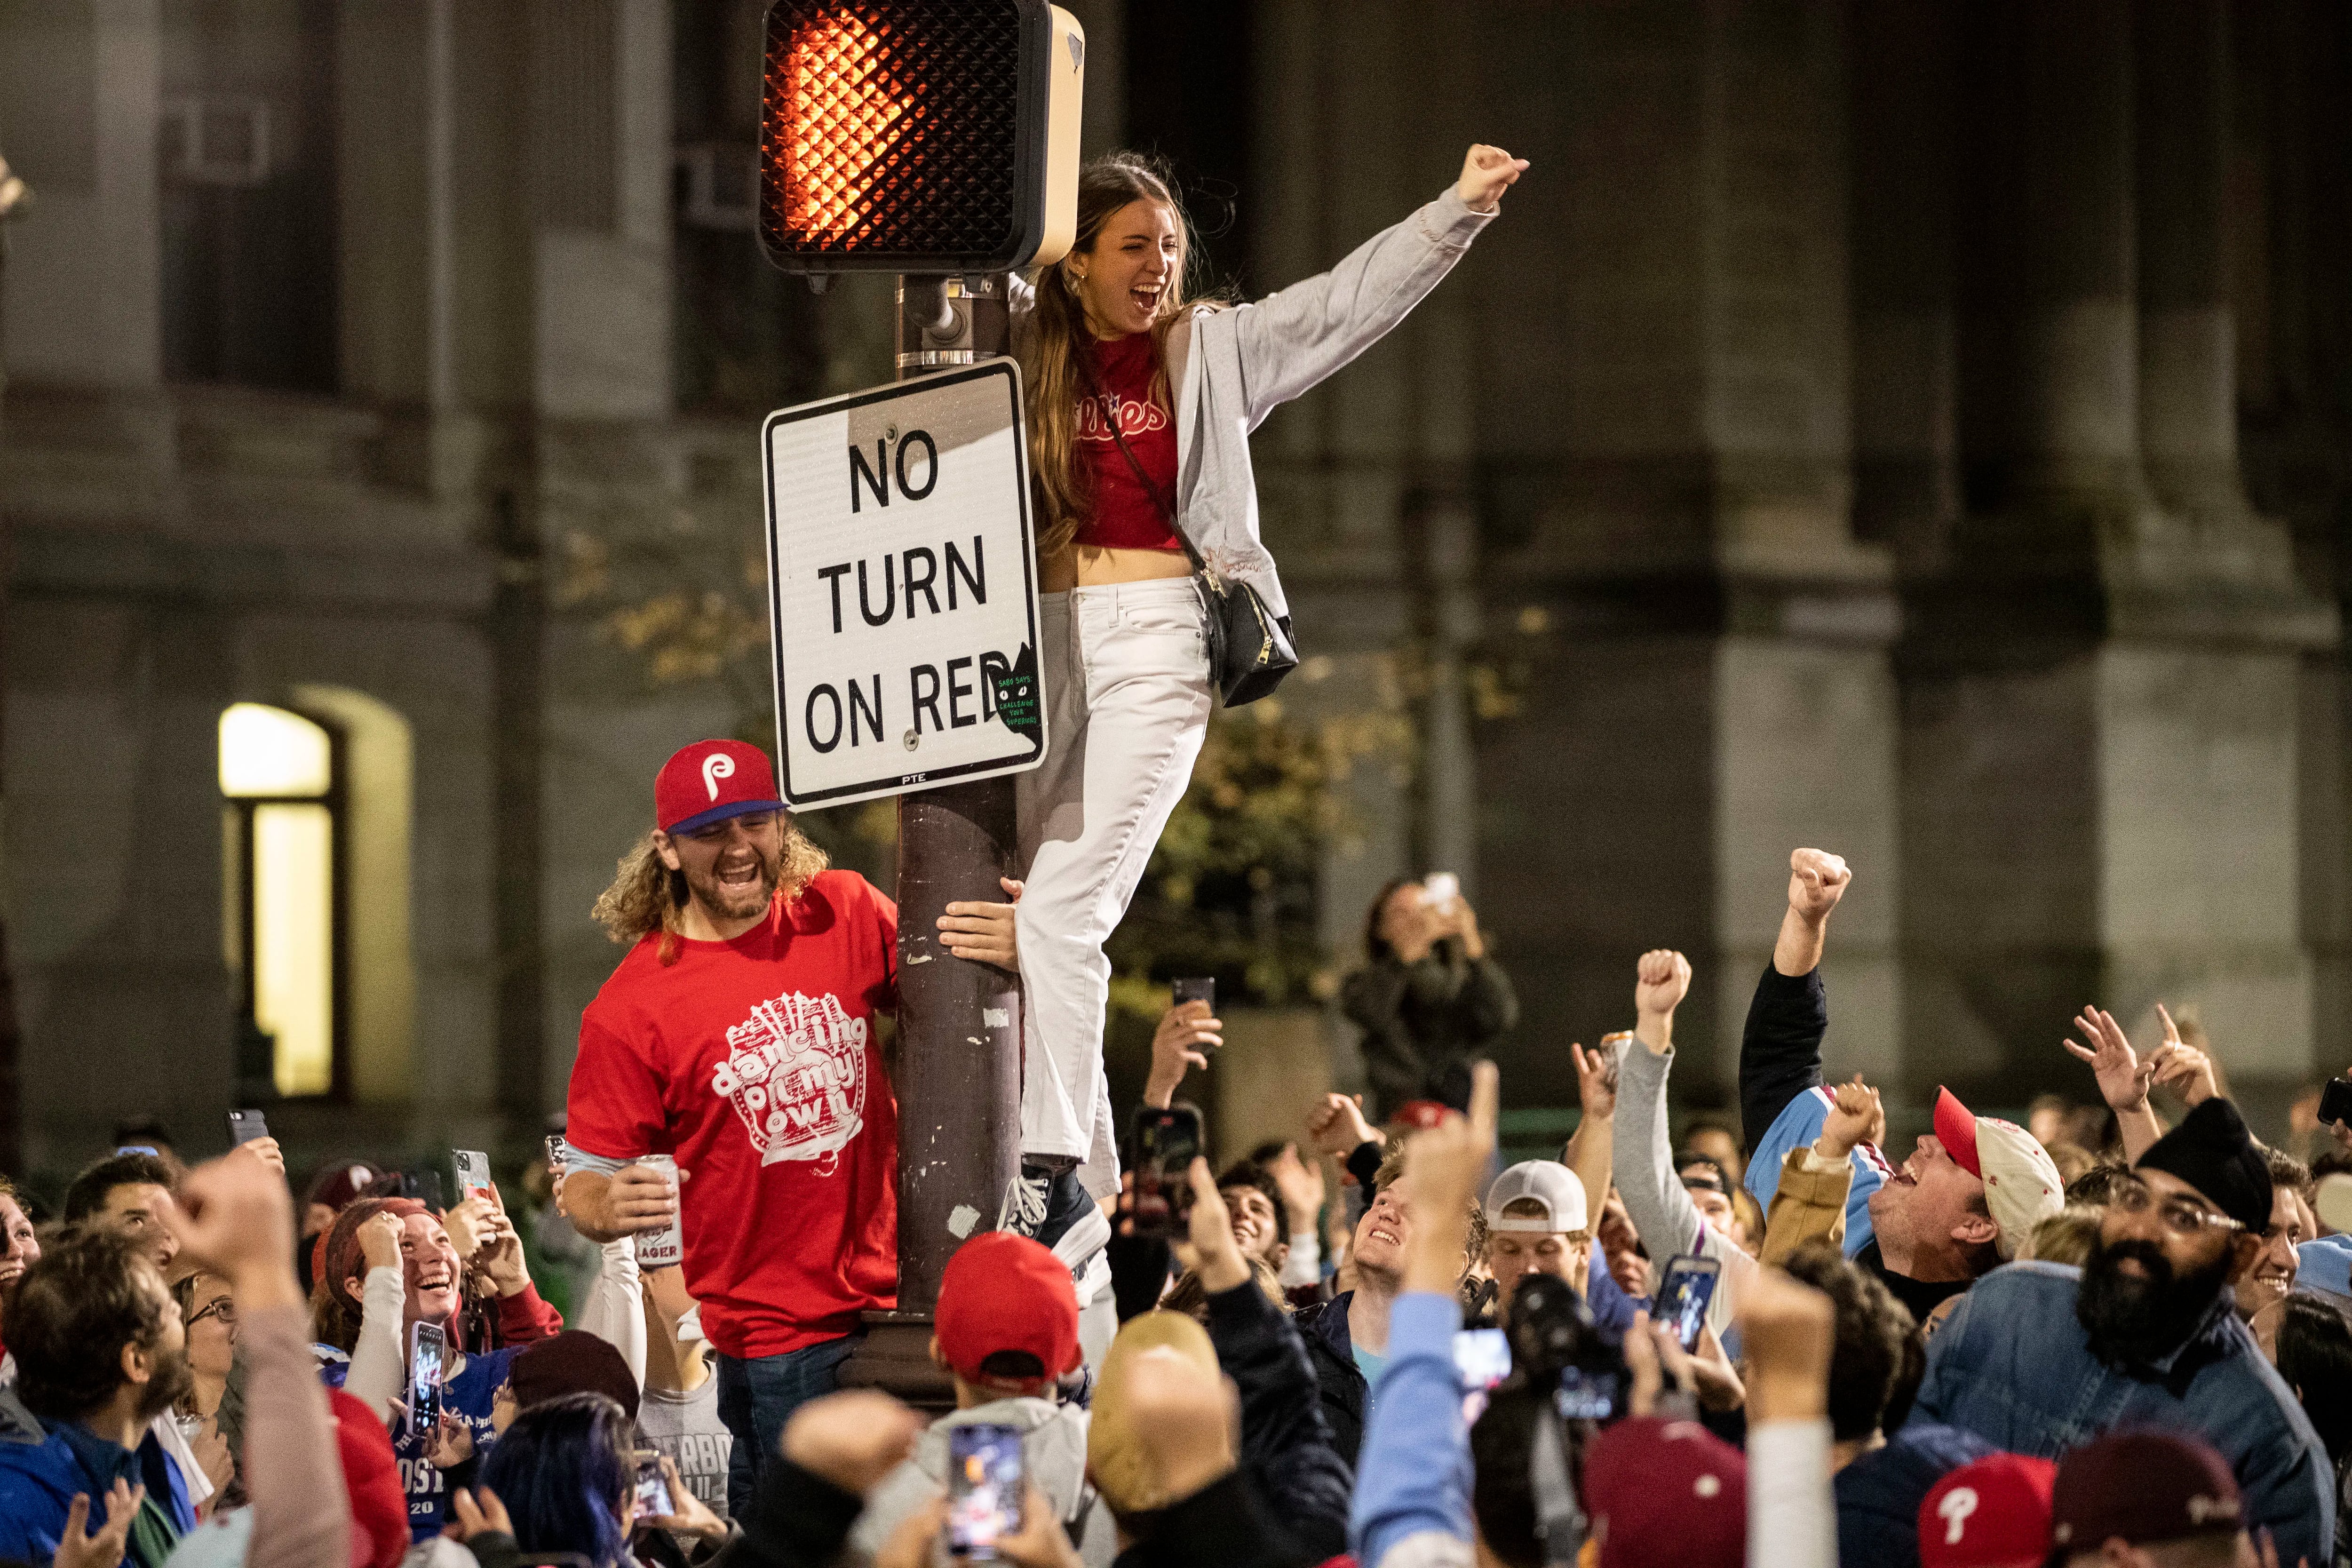 Fans roar as Phillies parade through city